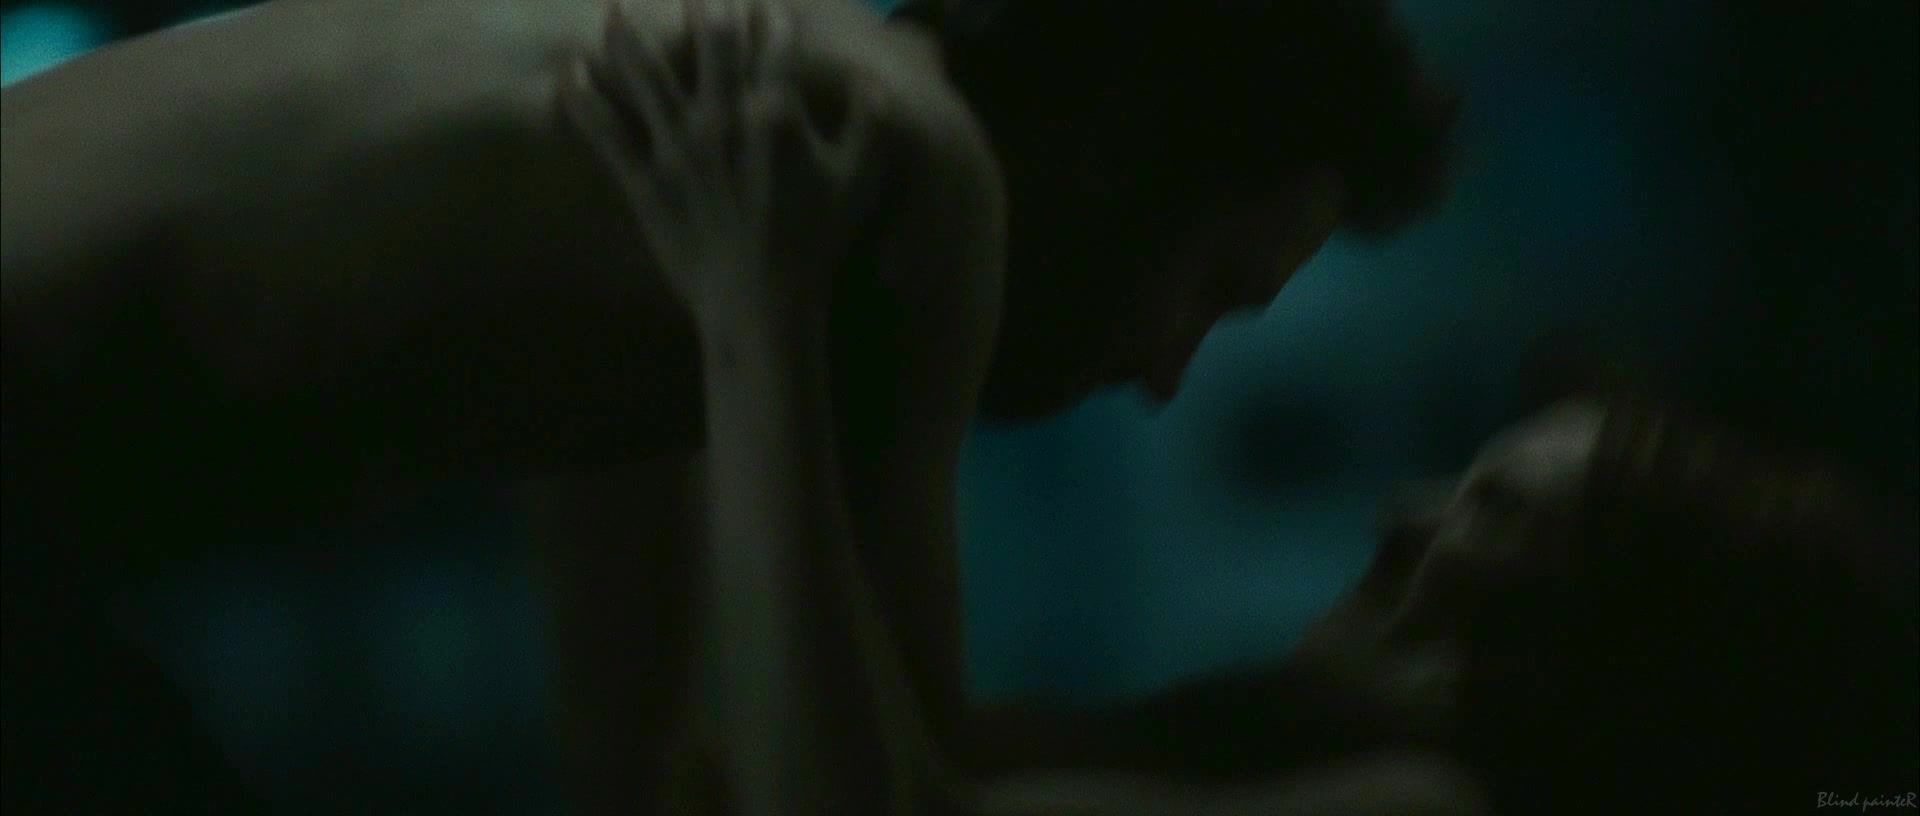 Culito Sex video Lauren Lee Smith nude - Pathology (2008) Big Boobs - 2